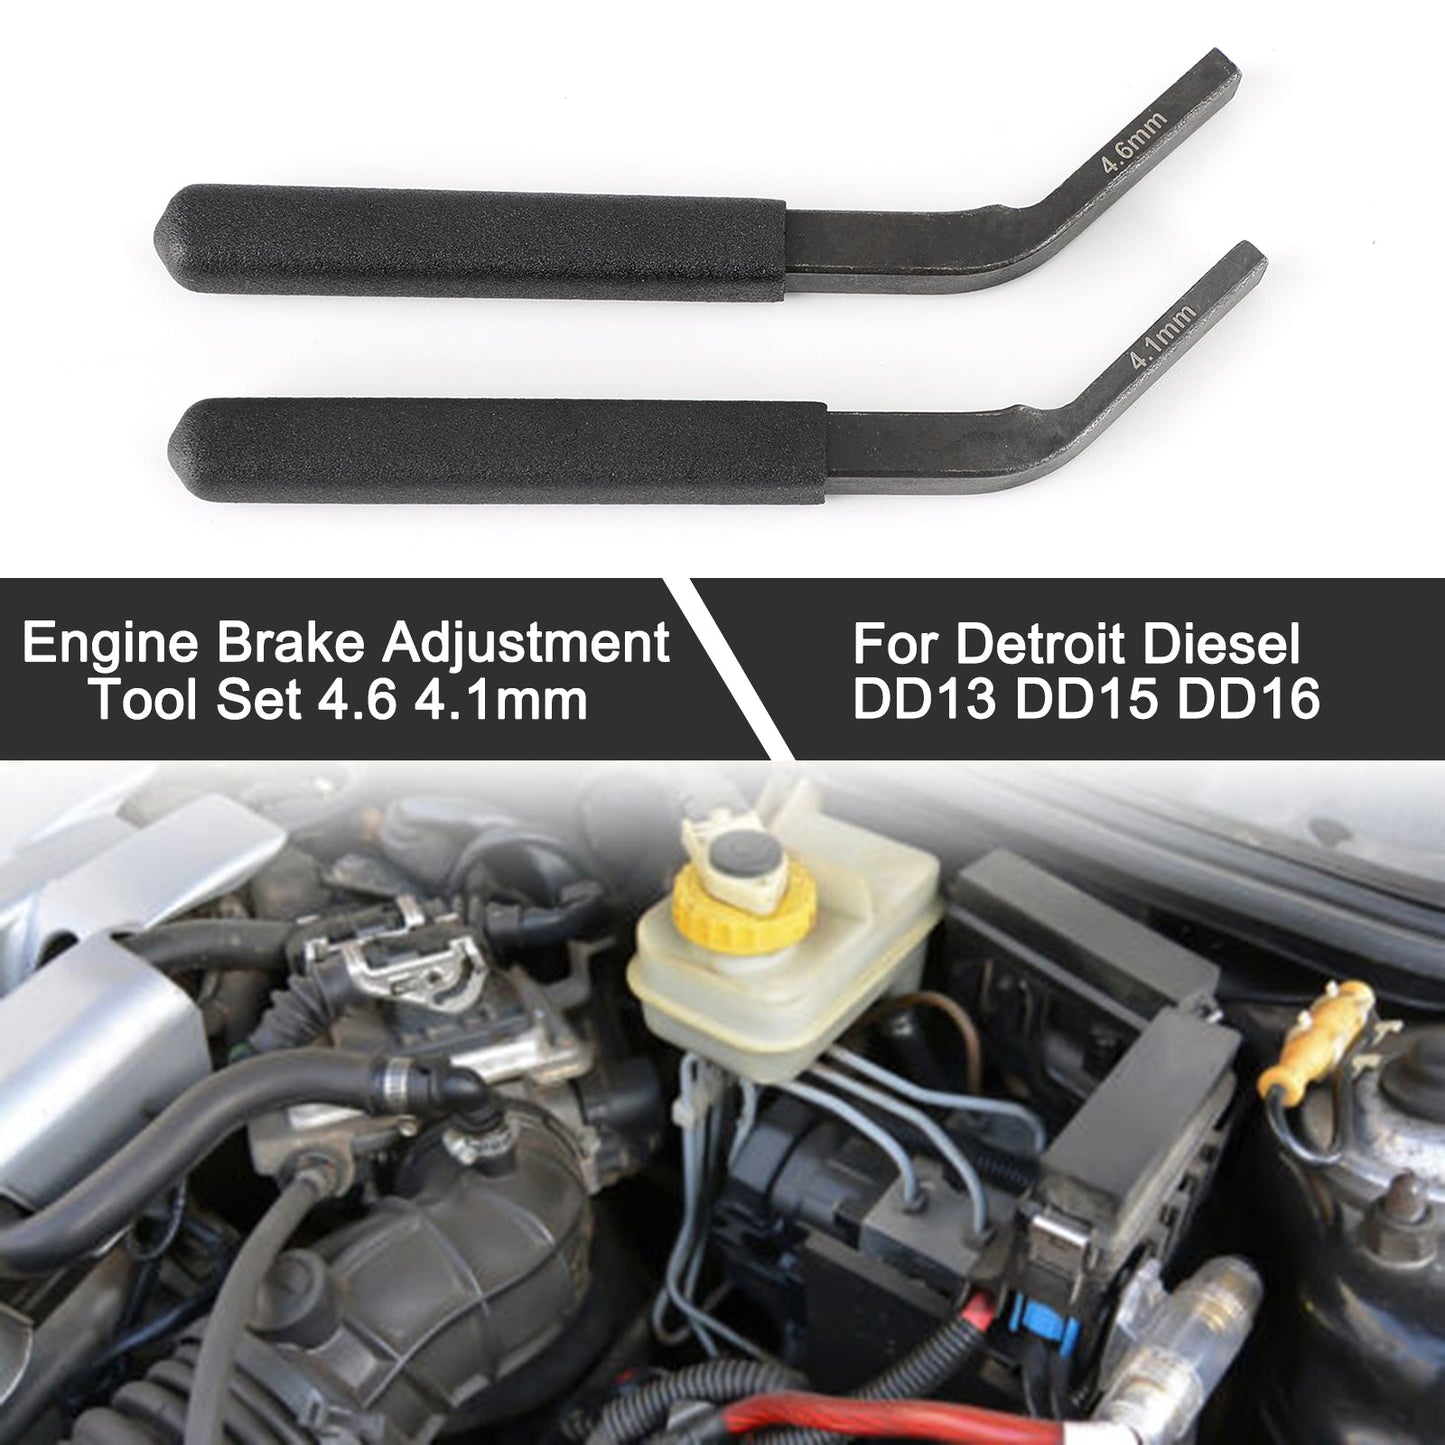 Engine Brake Adjustment Tool 4.6&4.1mm Kit For Detroit Diesel DD13 DD15 DD16